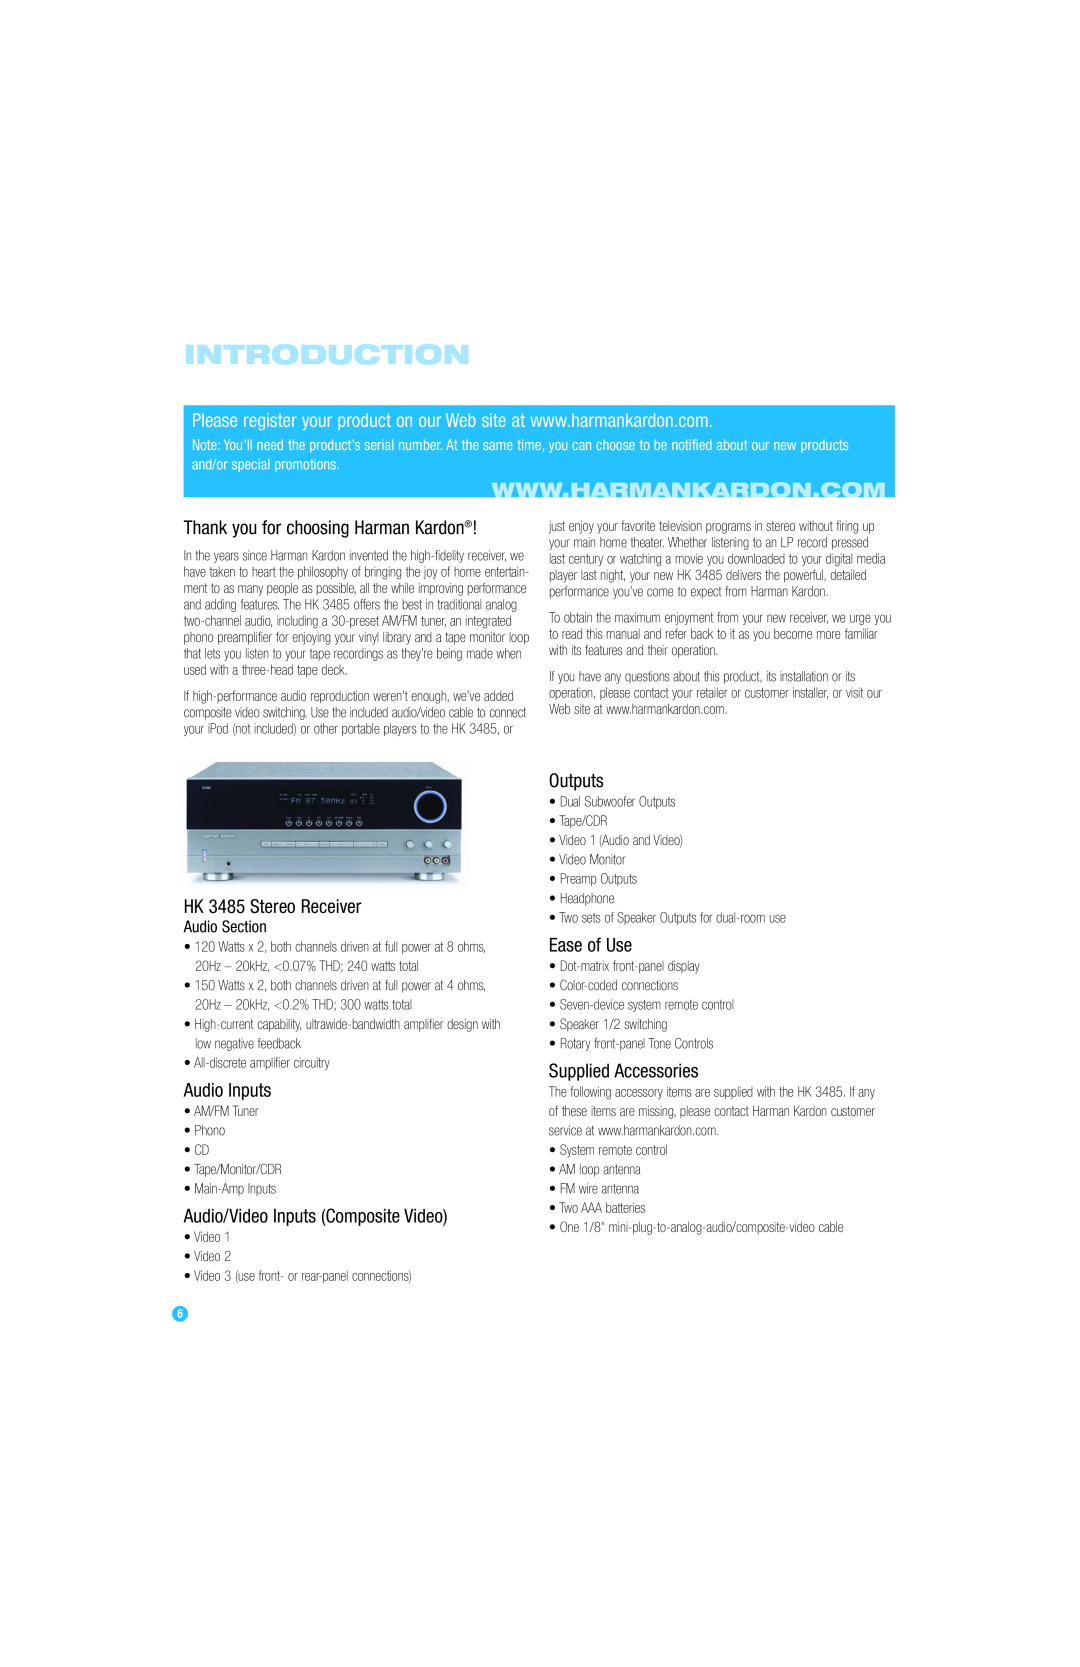 Harman-Kardon Introduction, Thank you for choosing Harman Kardon, Outputs, HK 3485 Stereo Receiver, Ease of Use 